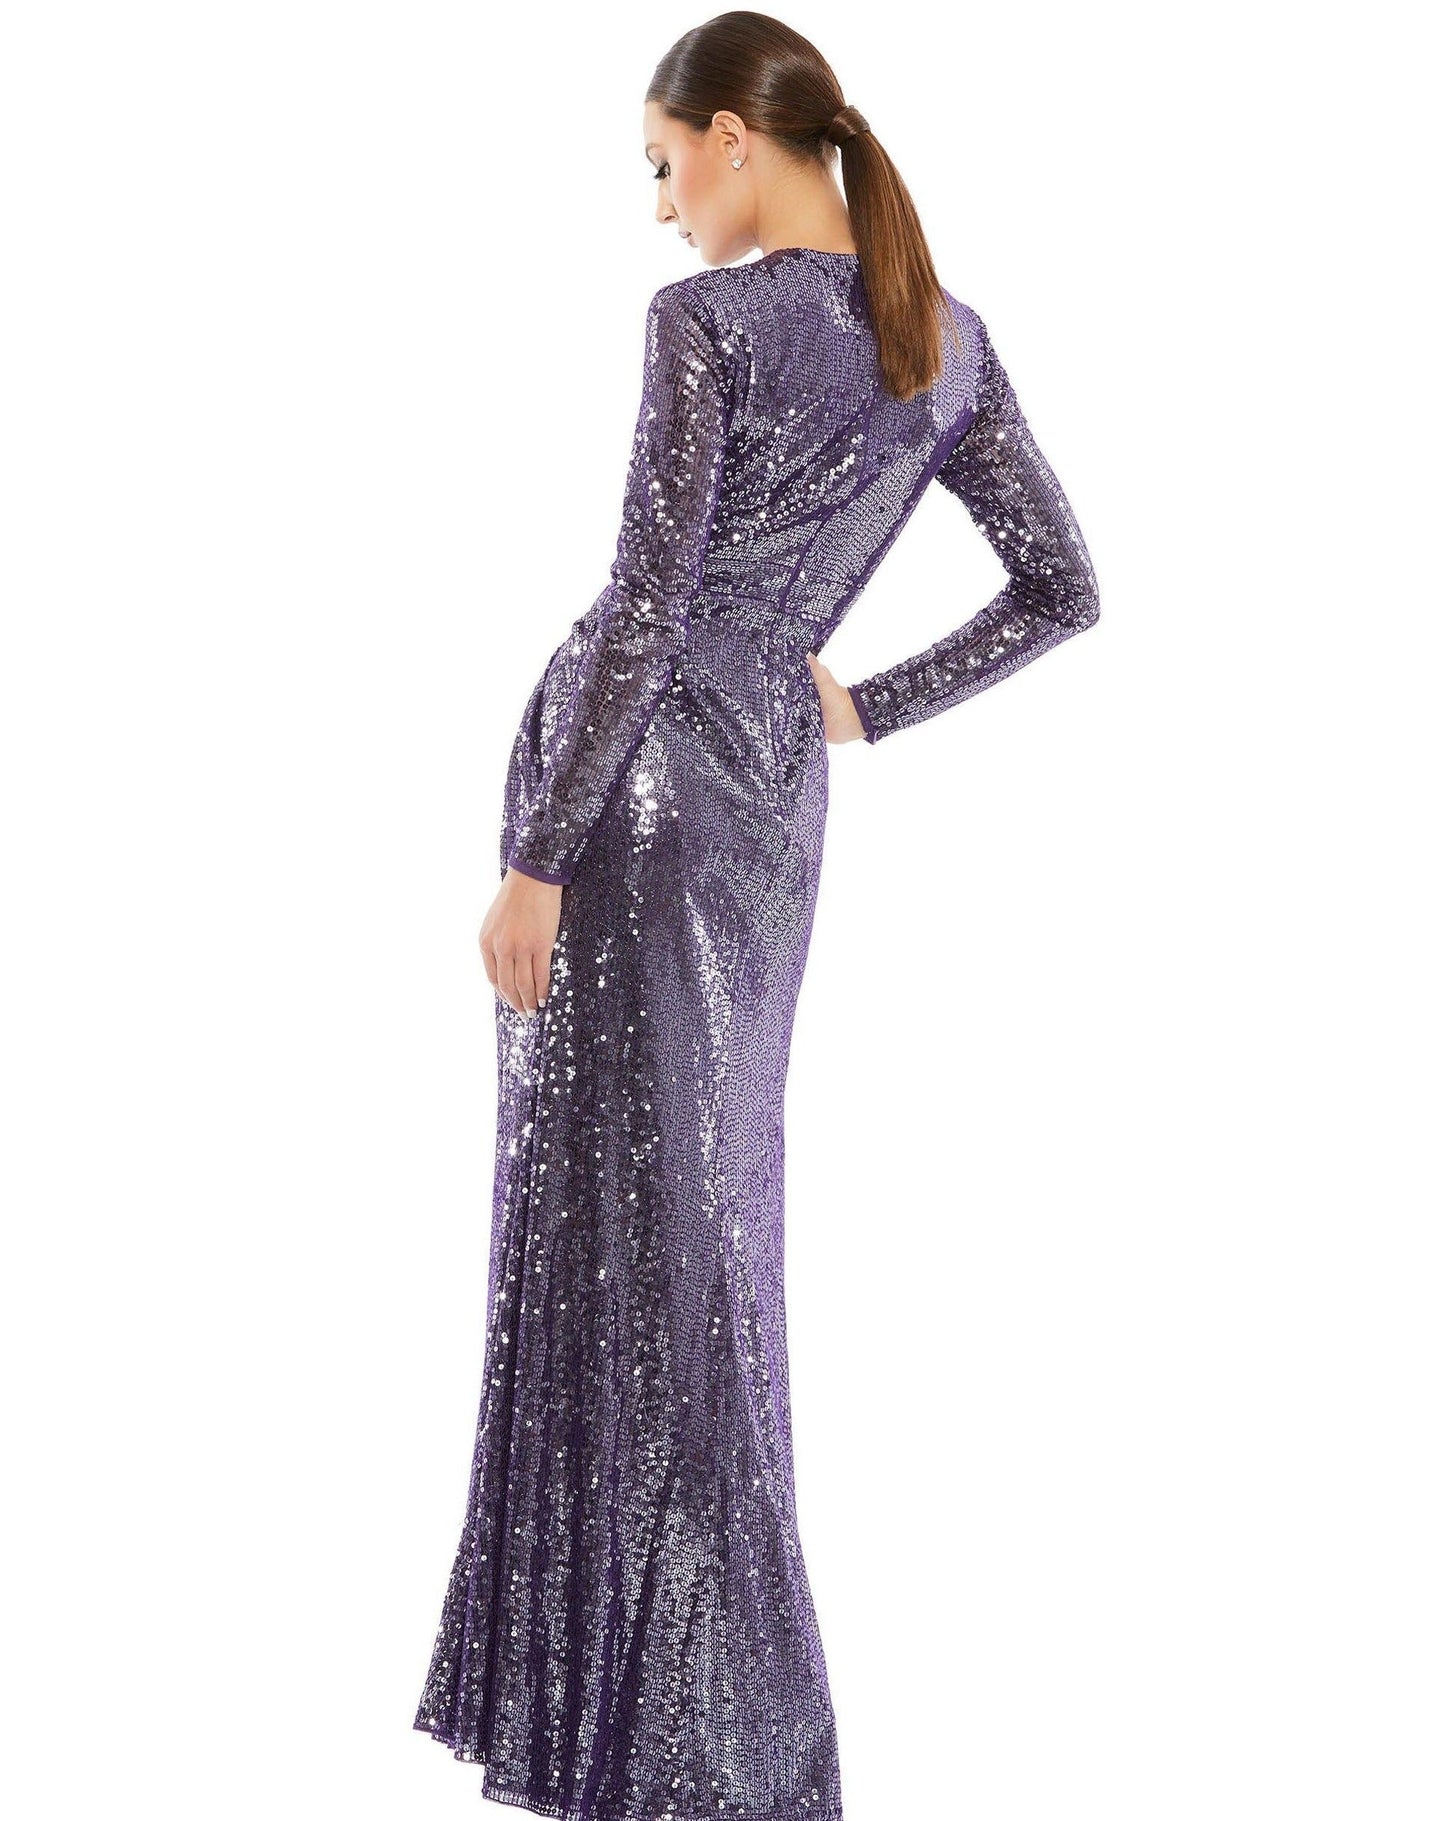 Mac Duggal Formal Long Sleeve Sequins Dress 10824 - The Dress Outlet